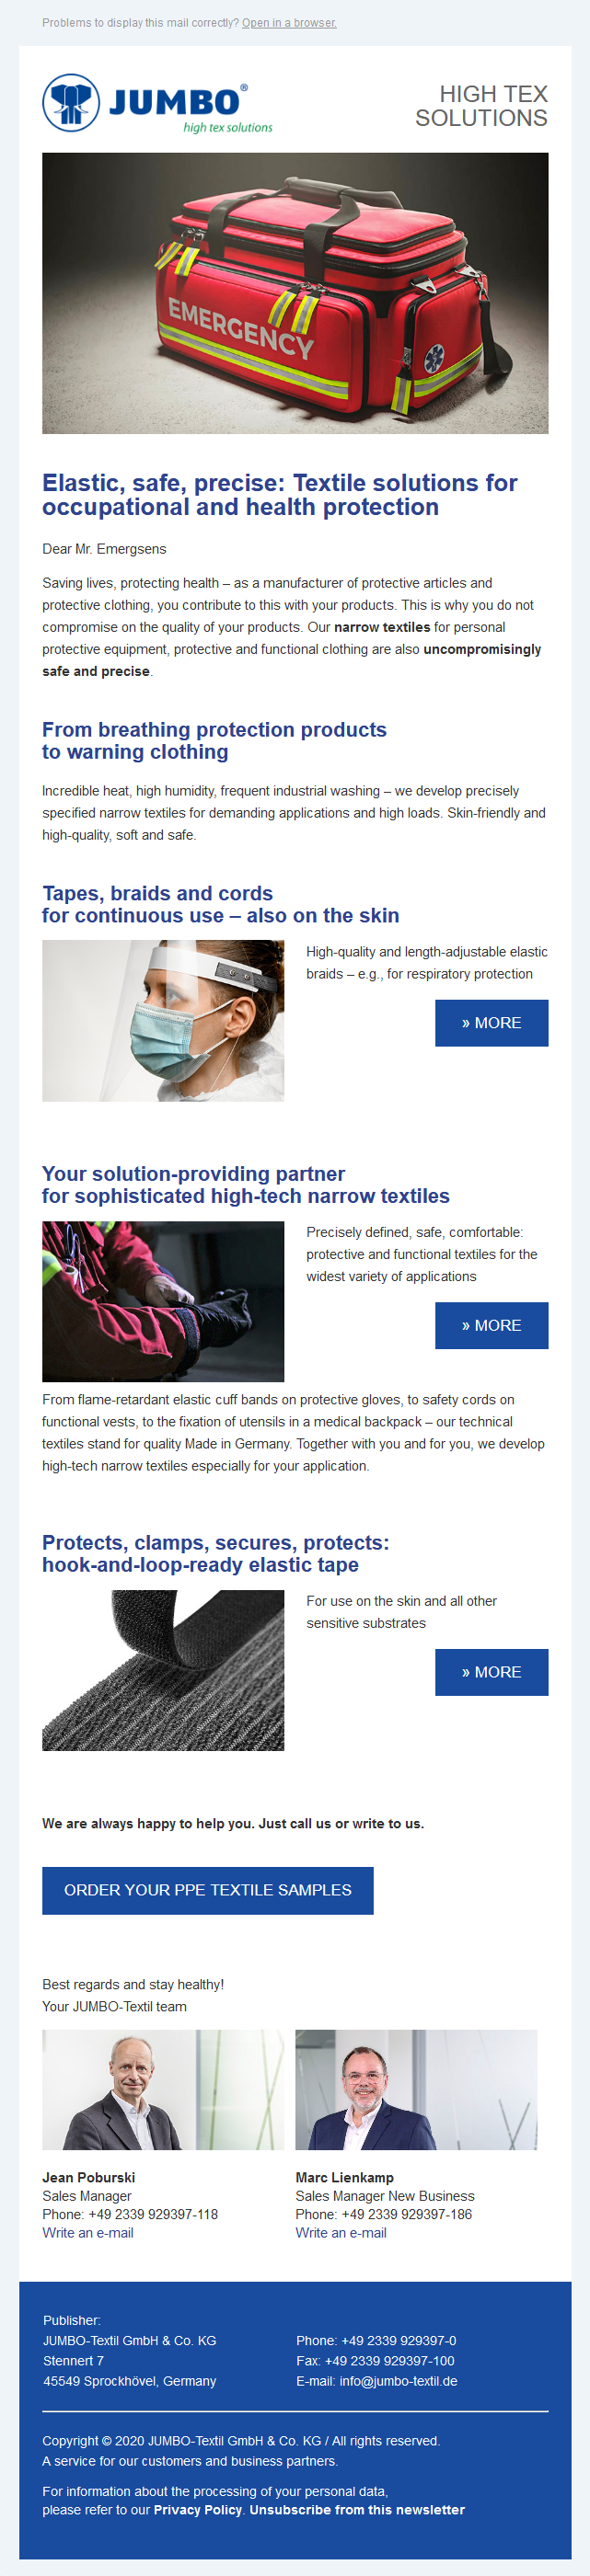 Newsletter Textile Innovationen